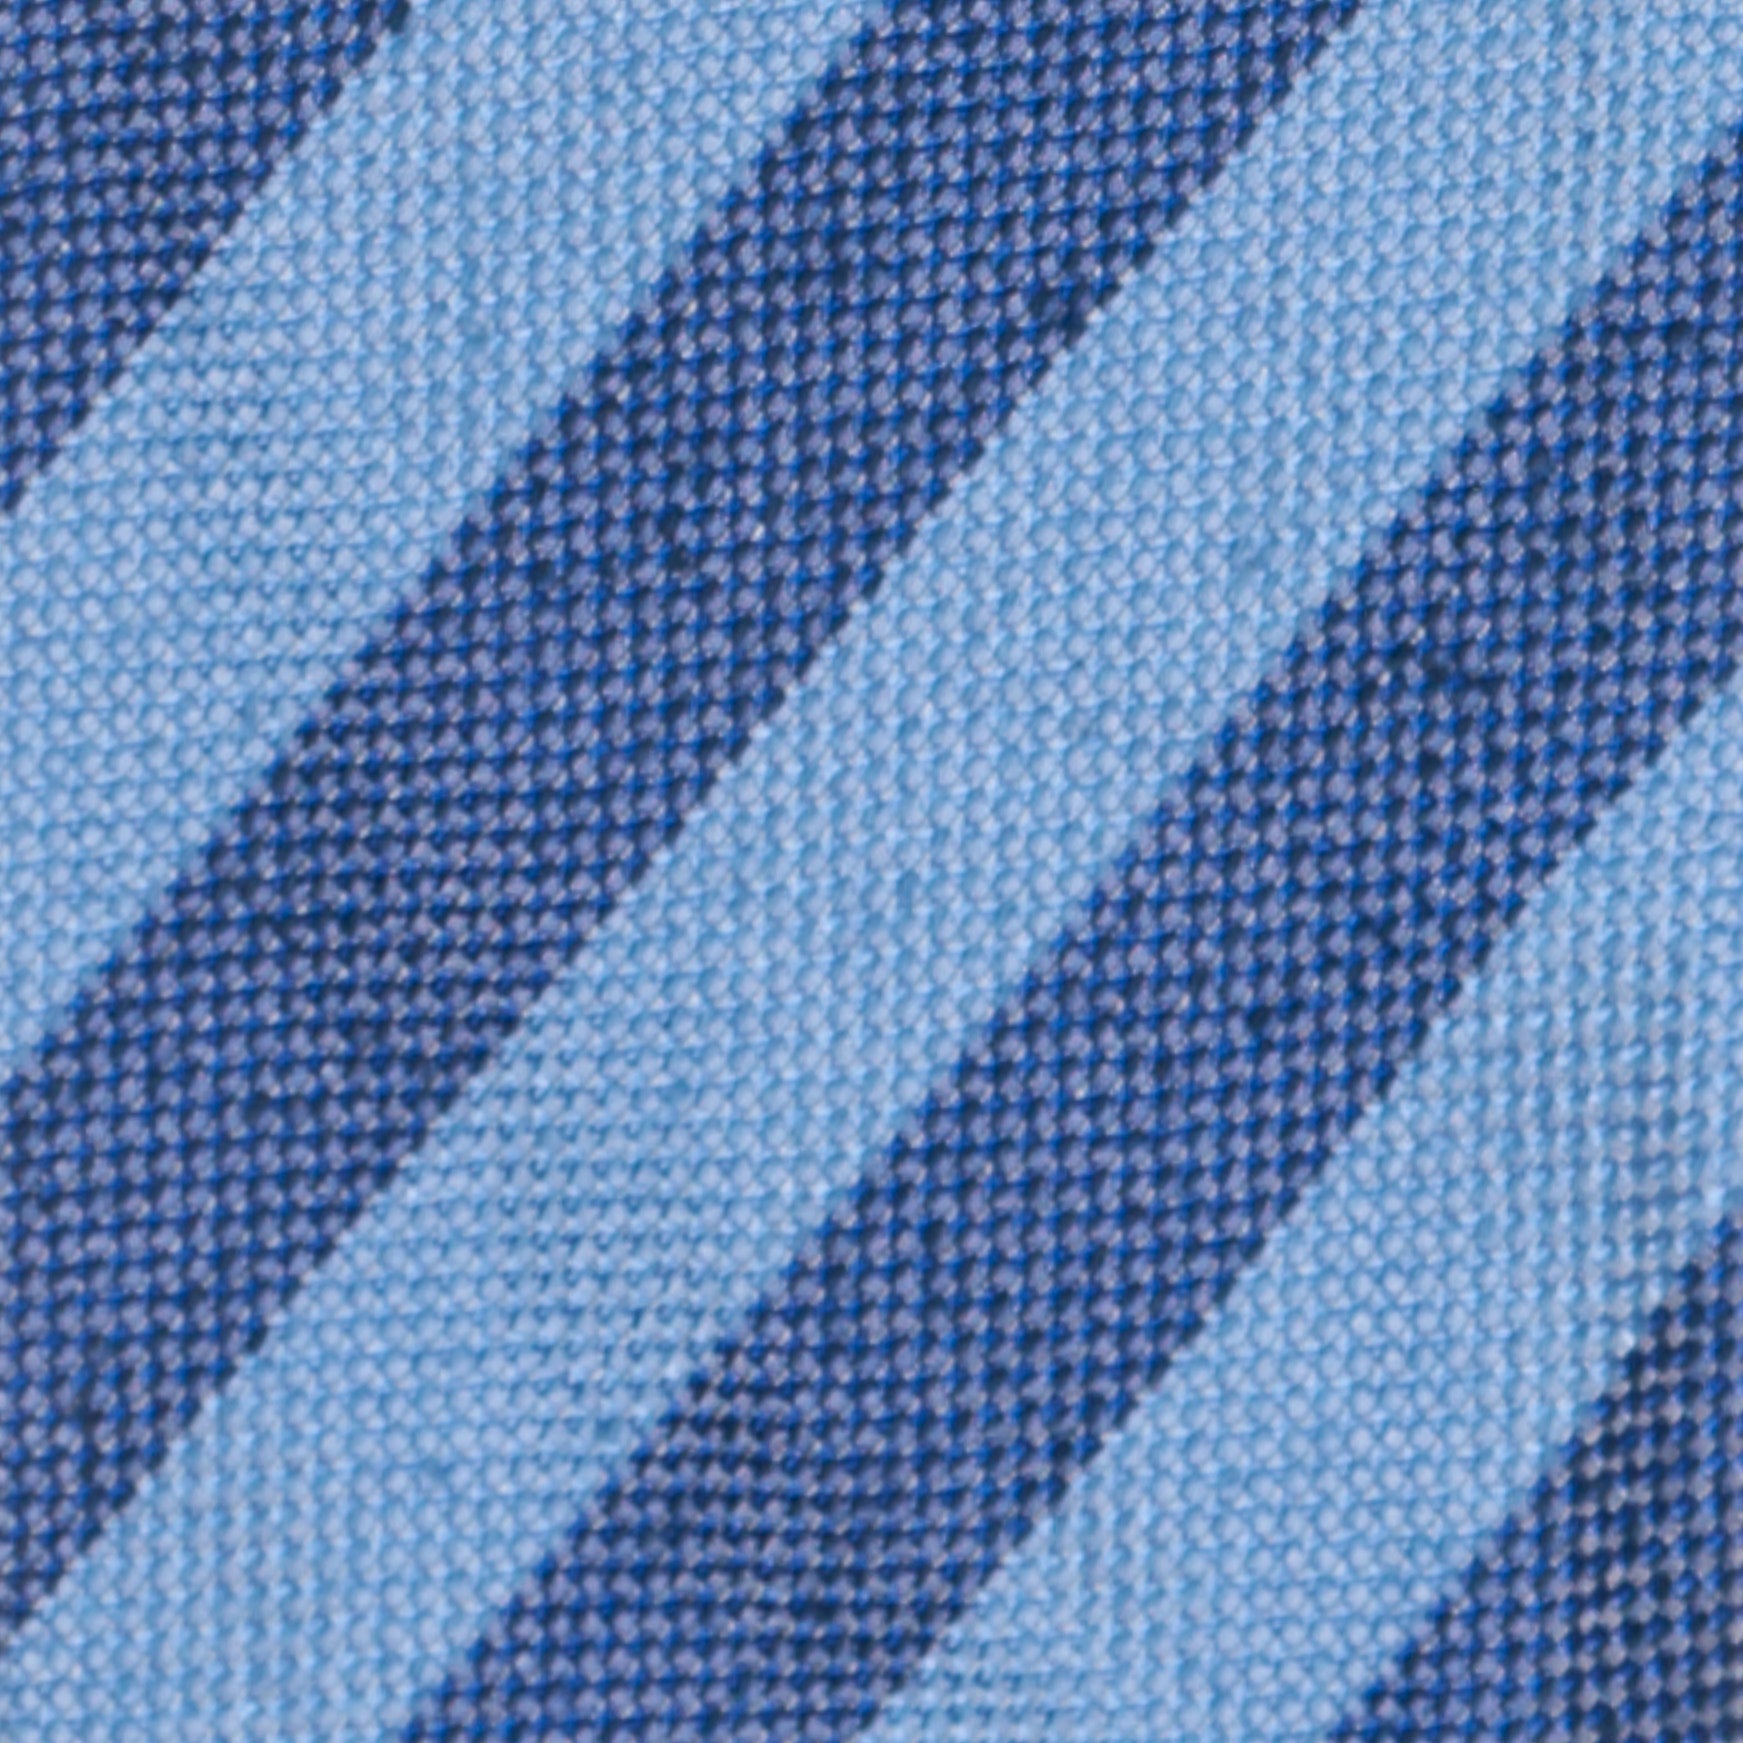 GIUSTO Bespoke Handmade Blue Awning Striped Silk Unlined Tie